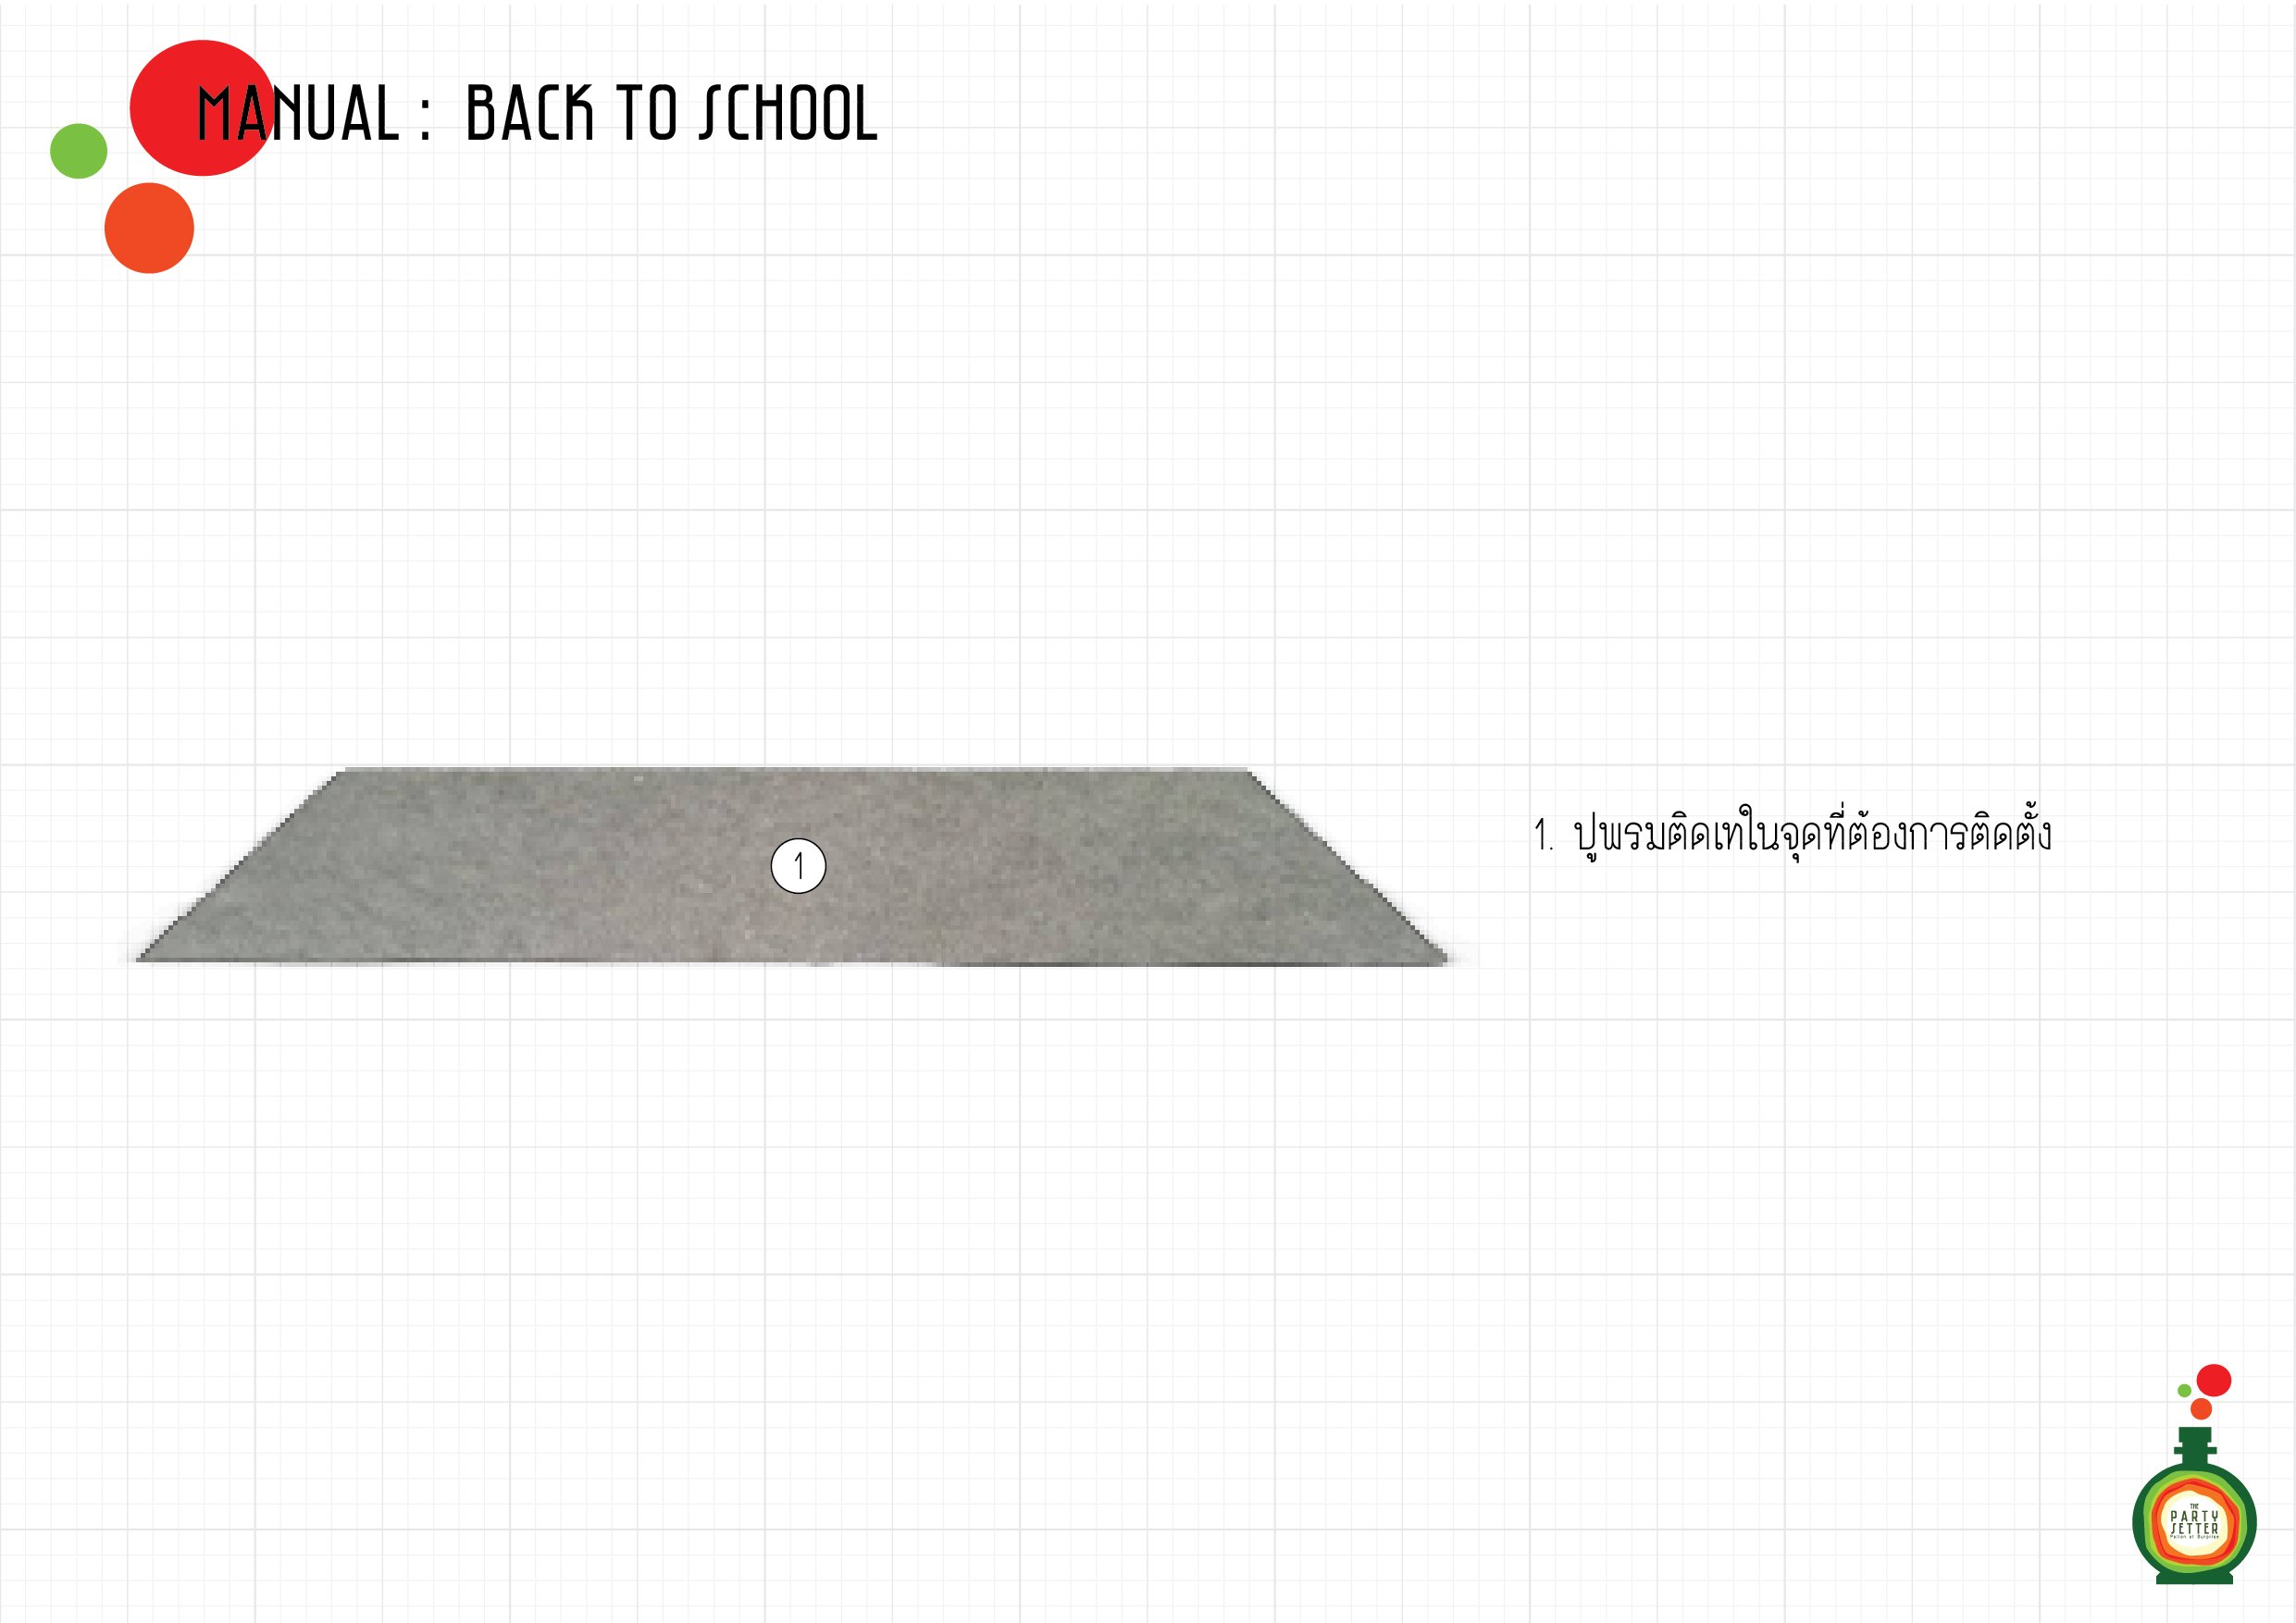 Manual_Back to School-2-01-01.jpg